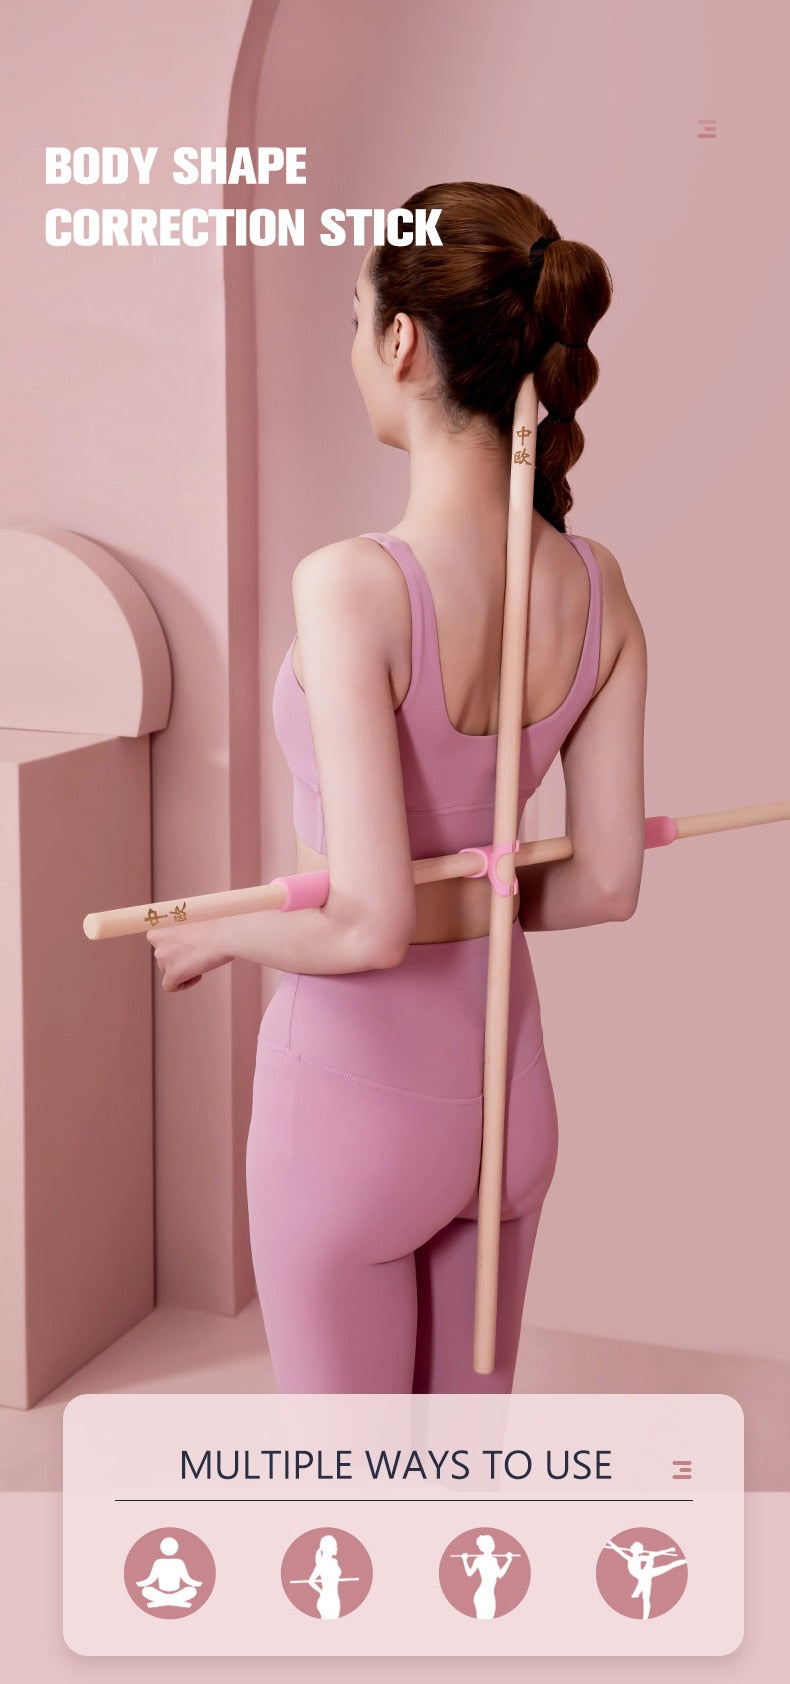 Women Girl Wooden Posture Corrector Stick/Back Posture Correction Stretcher